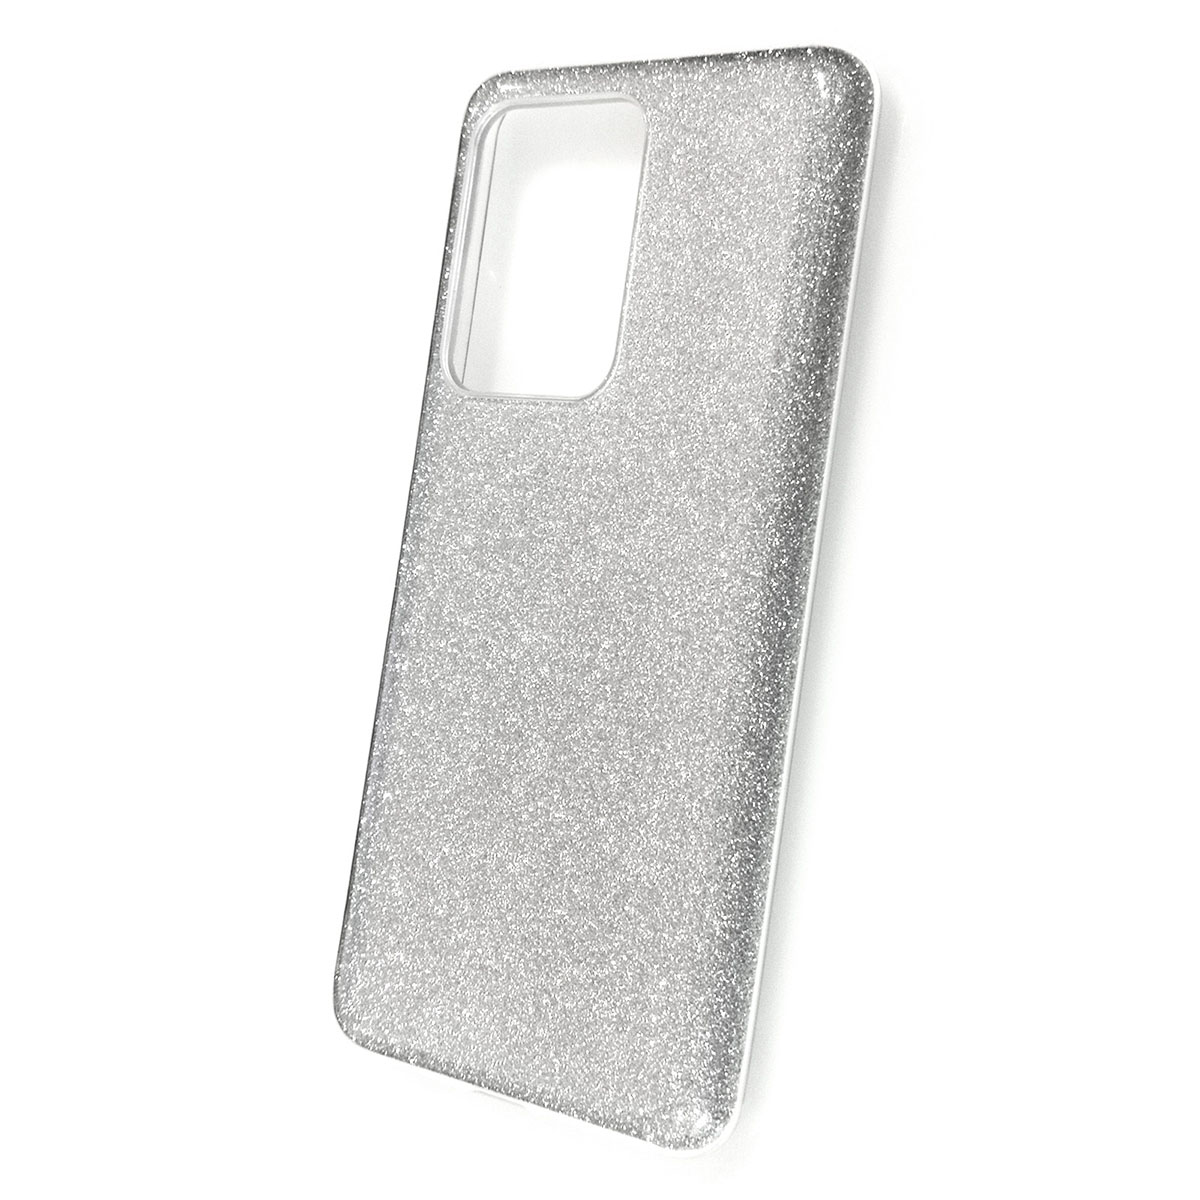 Чехол накладка Shine для SAMSUNG Galaxy S20 Ultra (SM-G988), силикон, блестки, цвет серебристый.